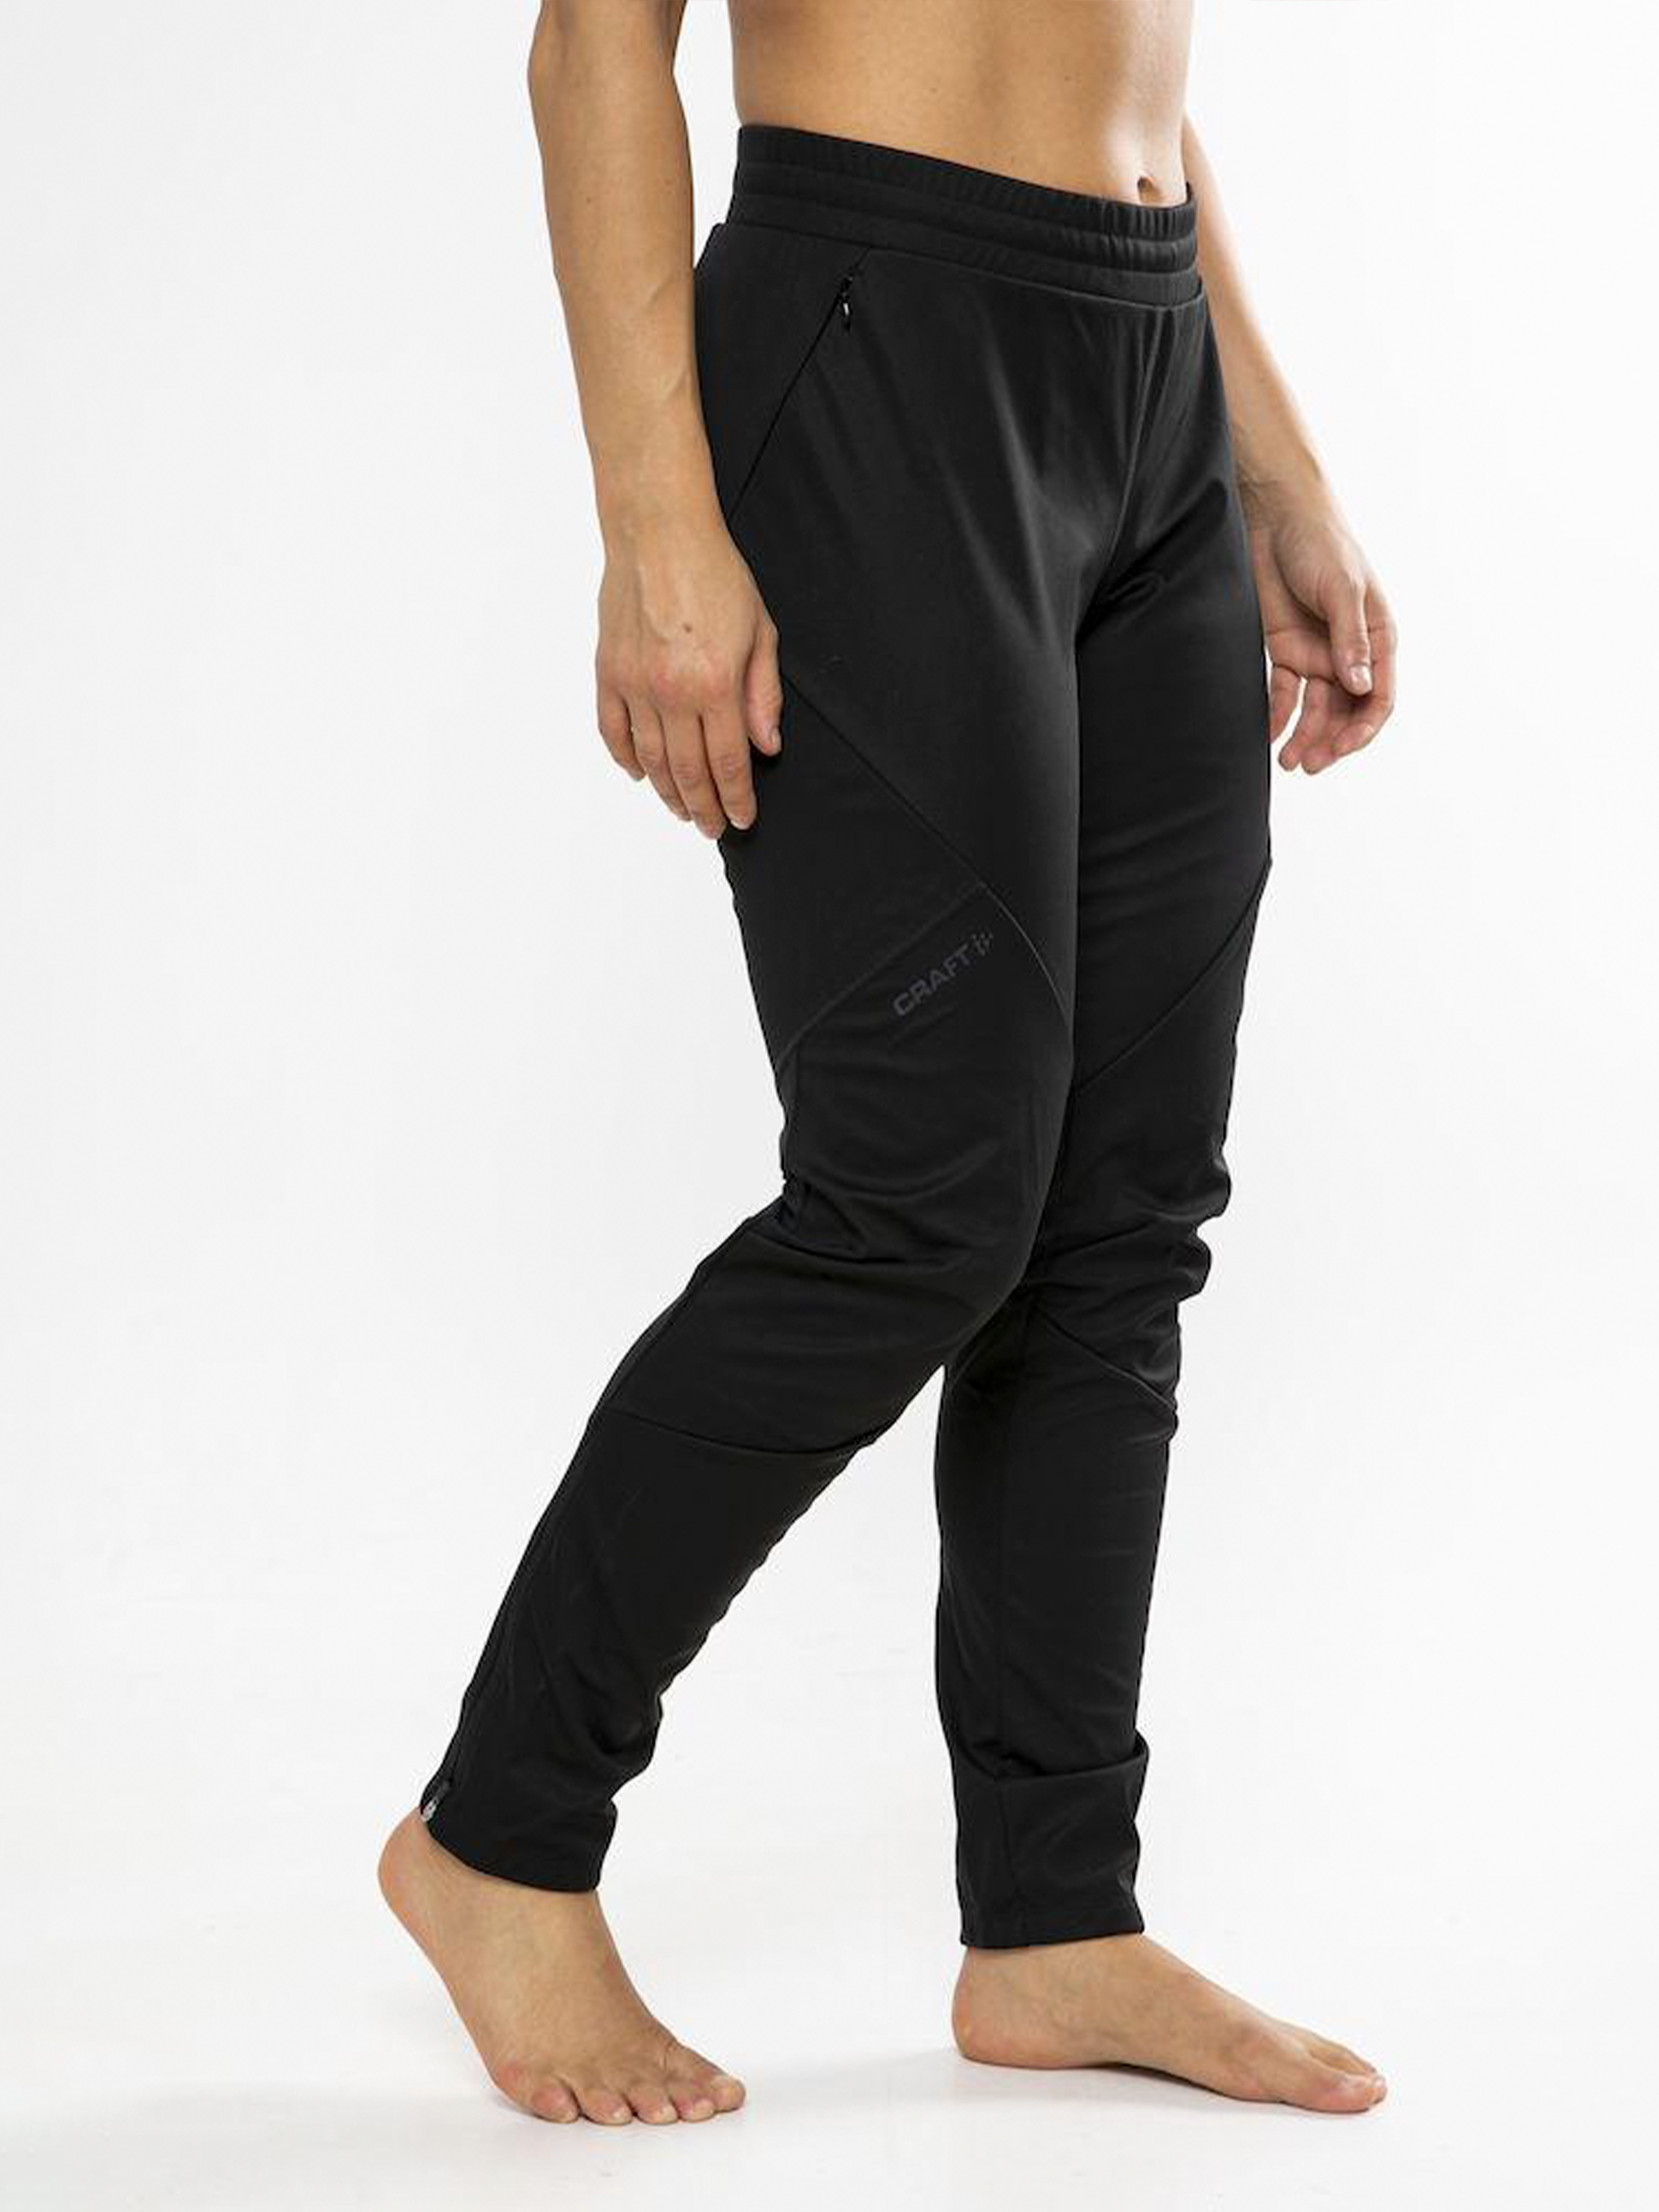 Women's Low-Rise Bootcut Yoga Pants with Pockets Stretch Slim Workout  Pants,Black,XS, Pants -  Canada